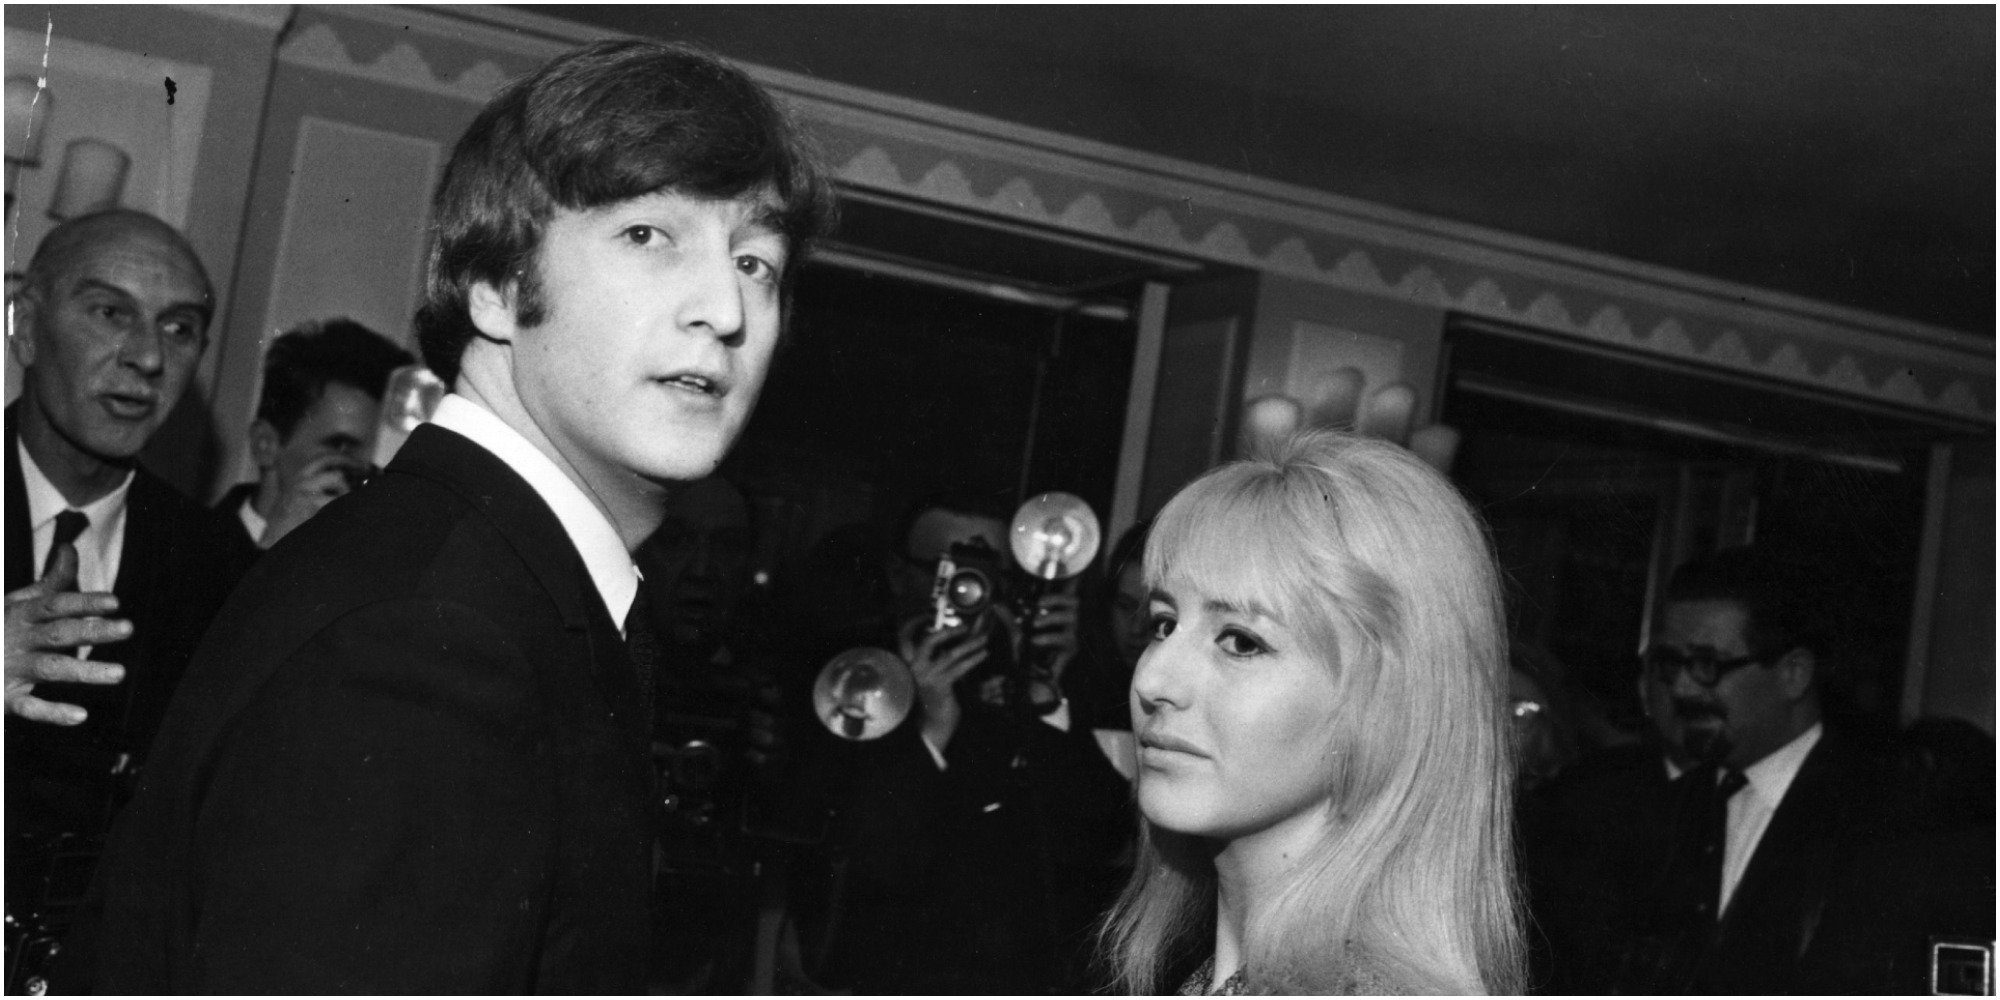 John and Cynthia Lennon pose for a photo taken in 1964.